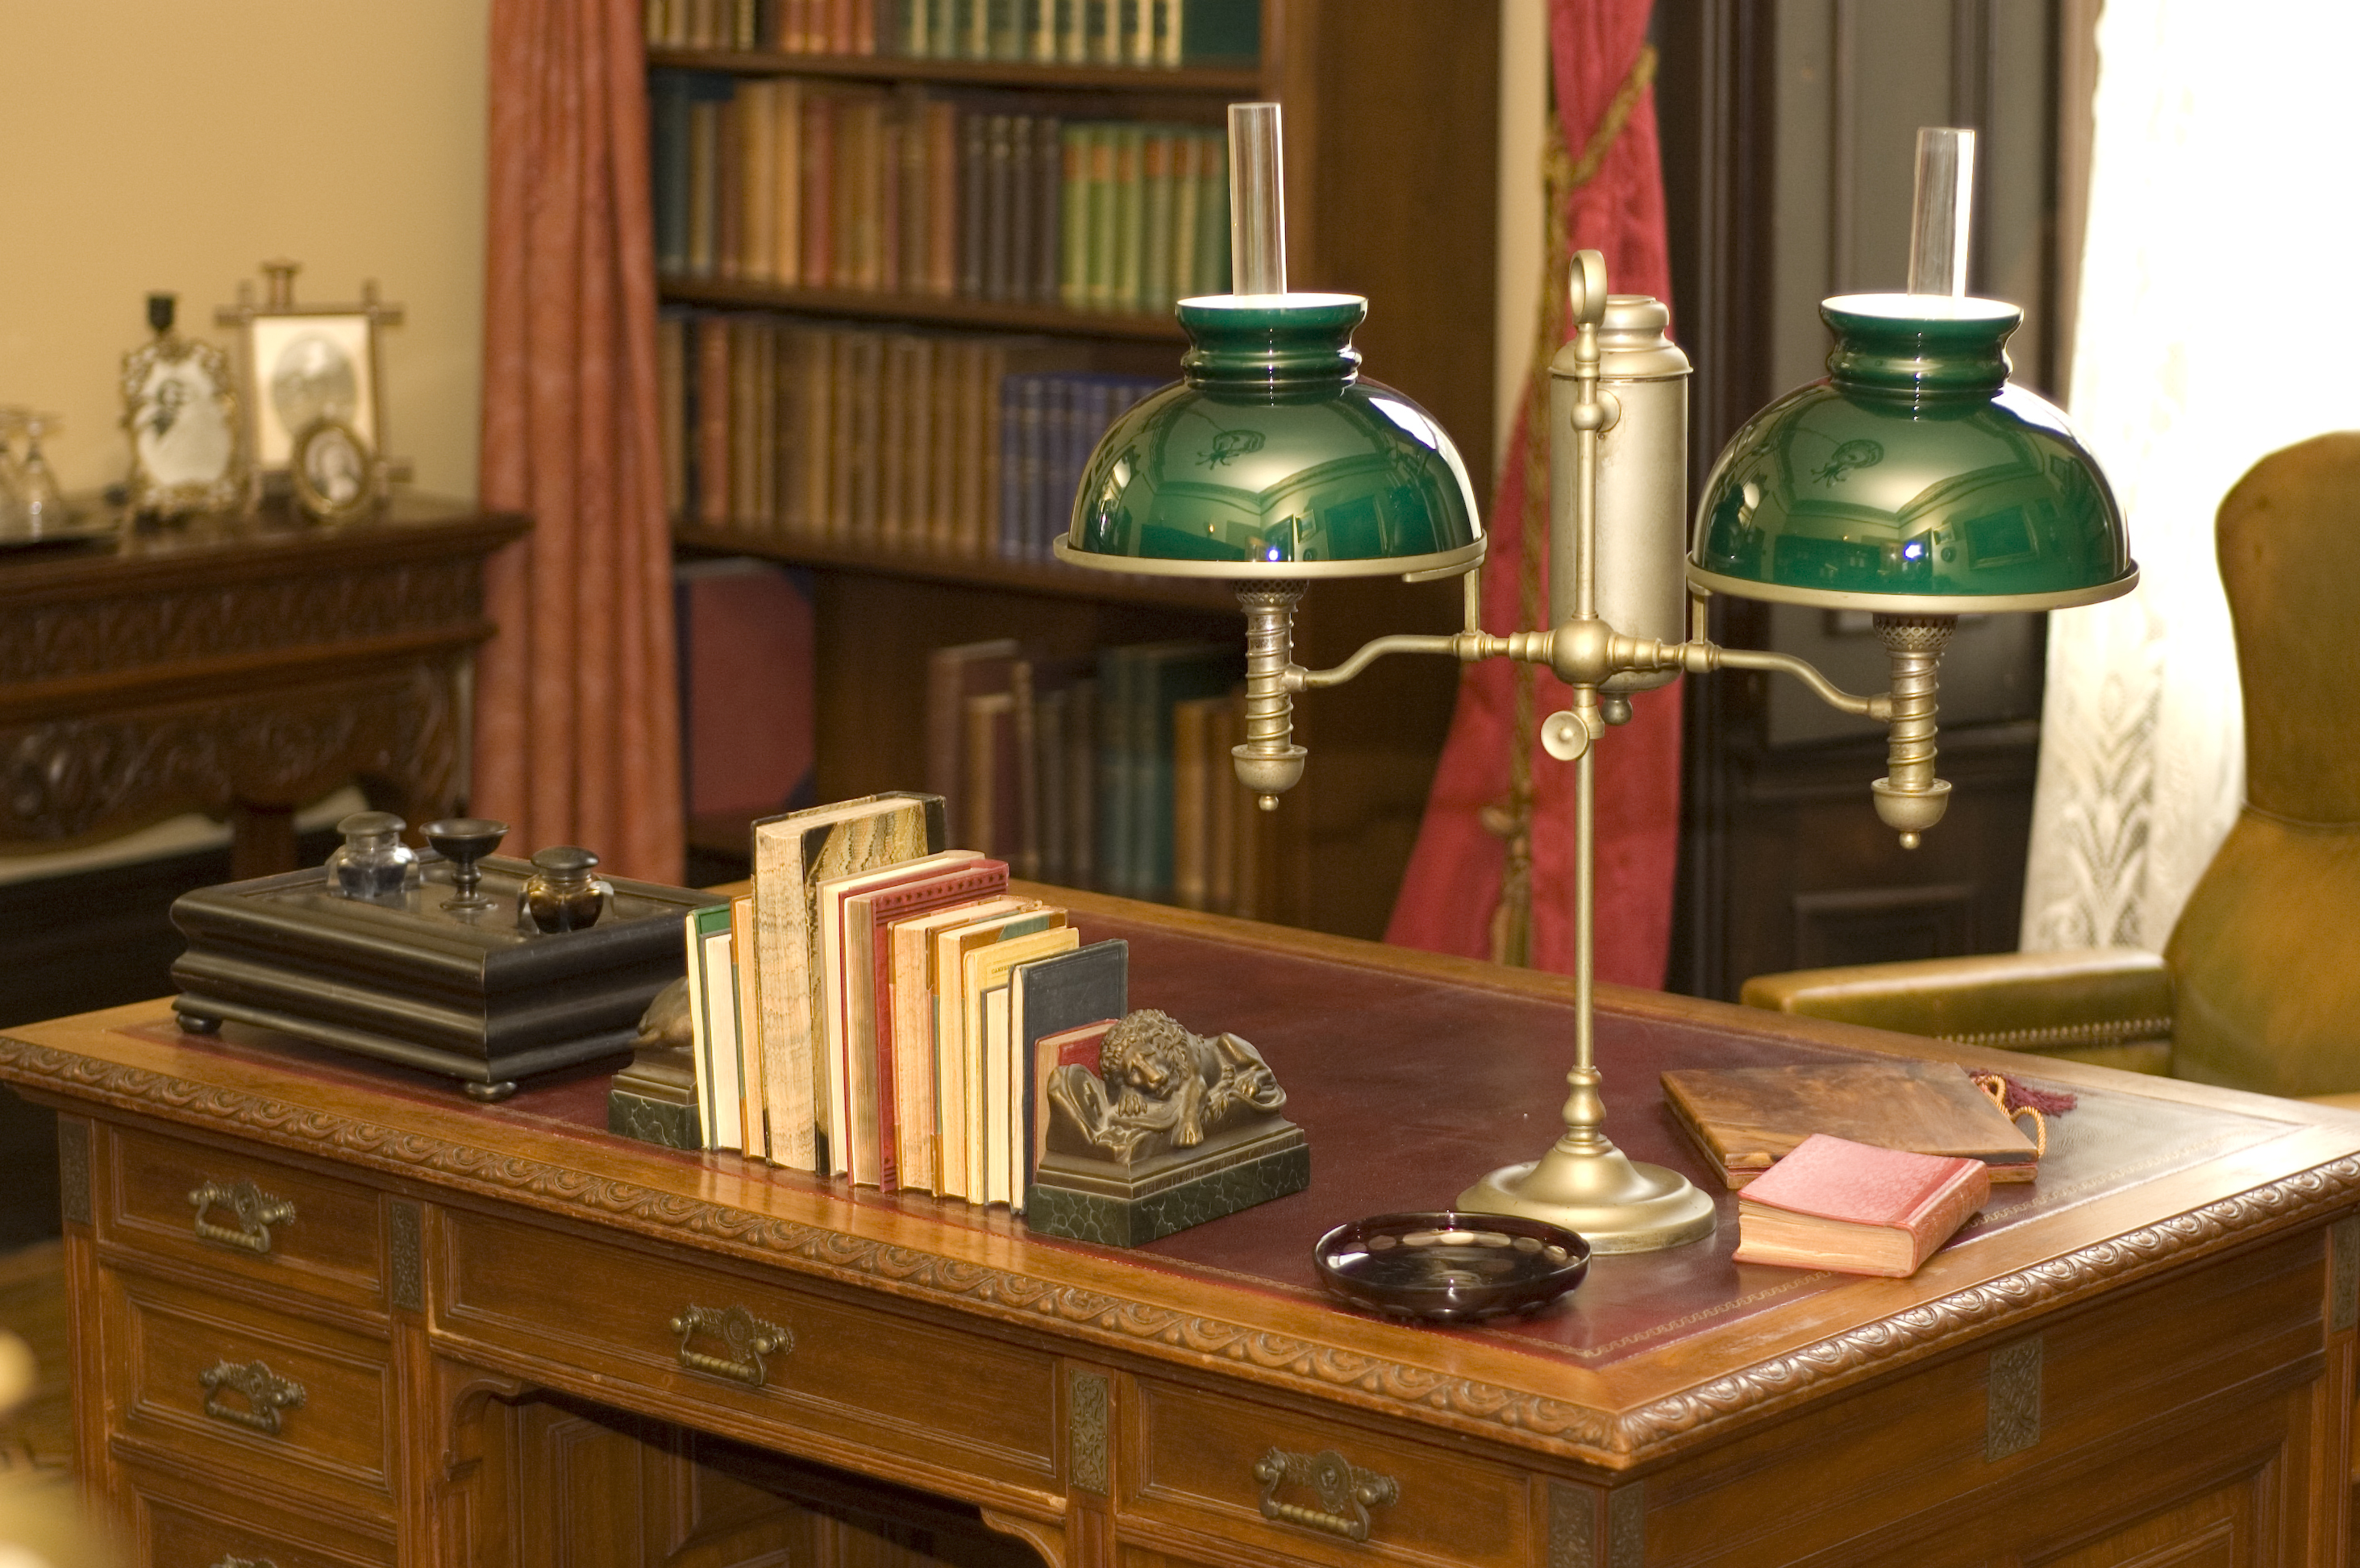 Classic oil lamp on antique office desk | Source: Shutterstock